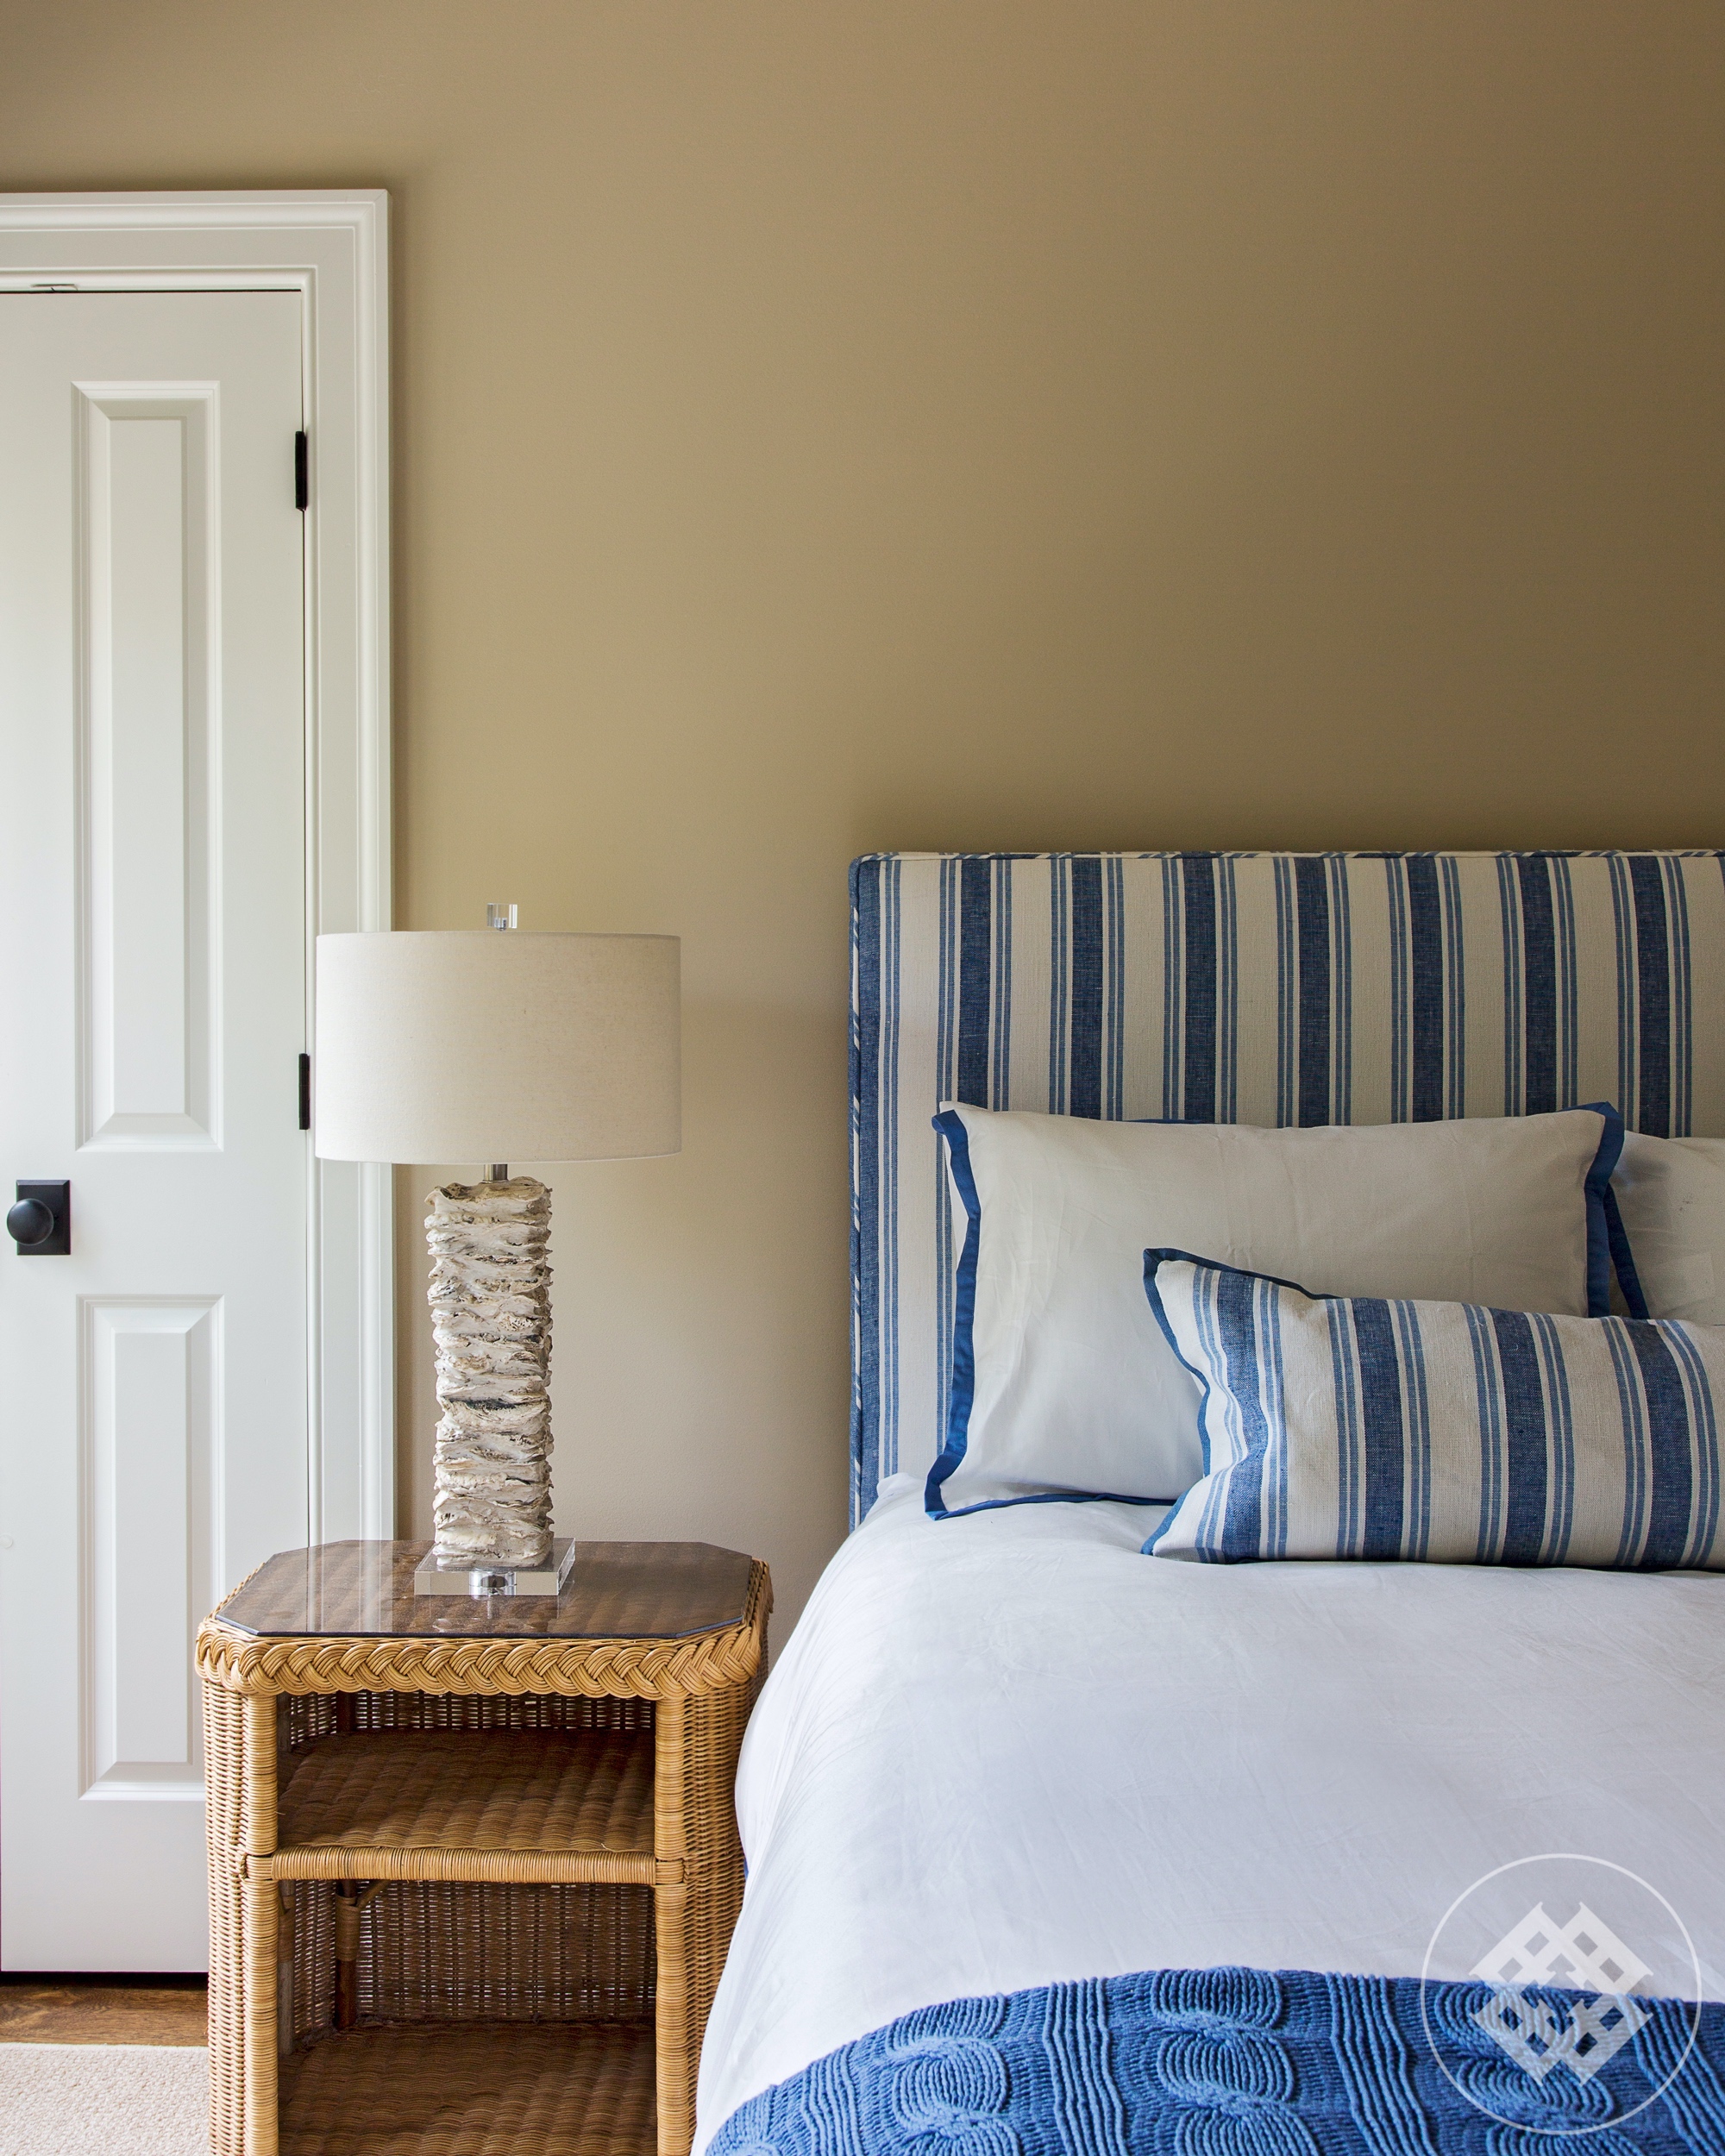 hss-bedroom-tabby-shell-lamp-custom-fabric-headboard.jpg